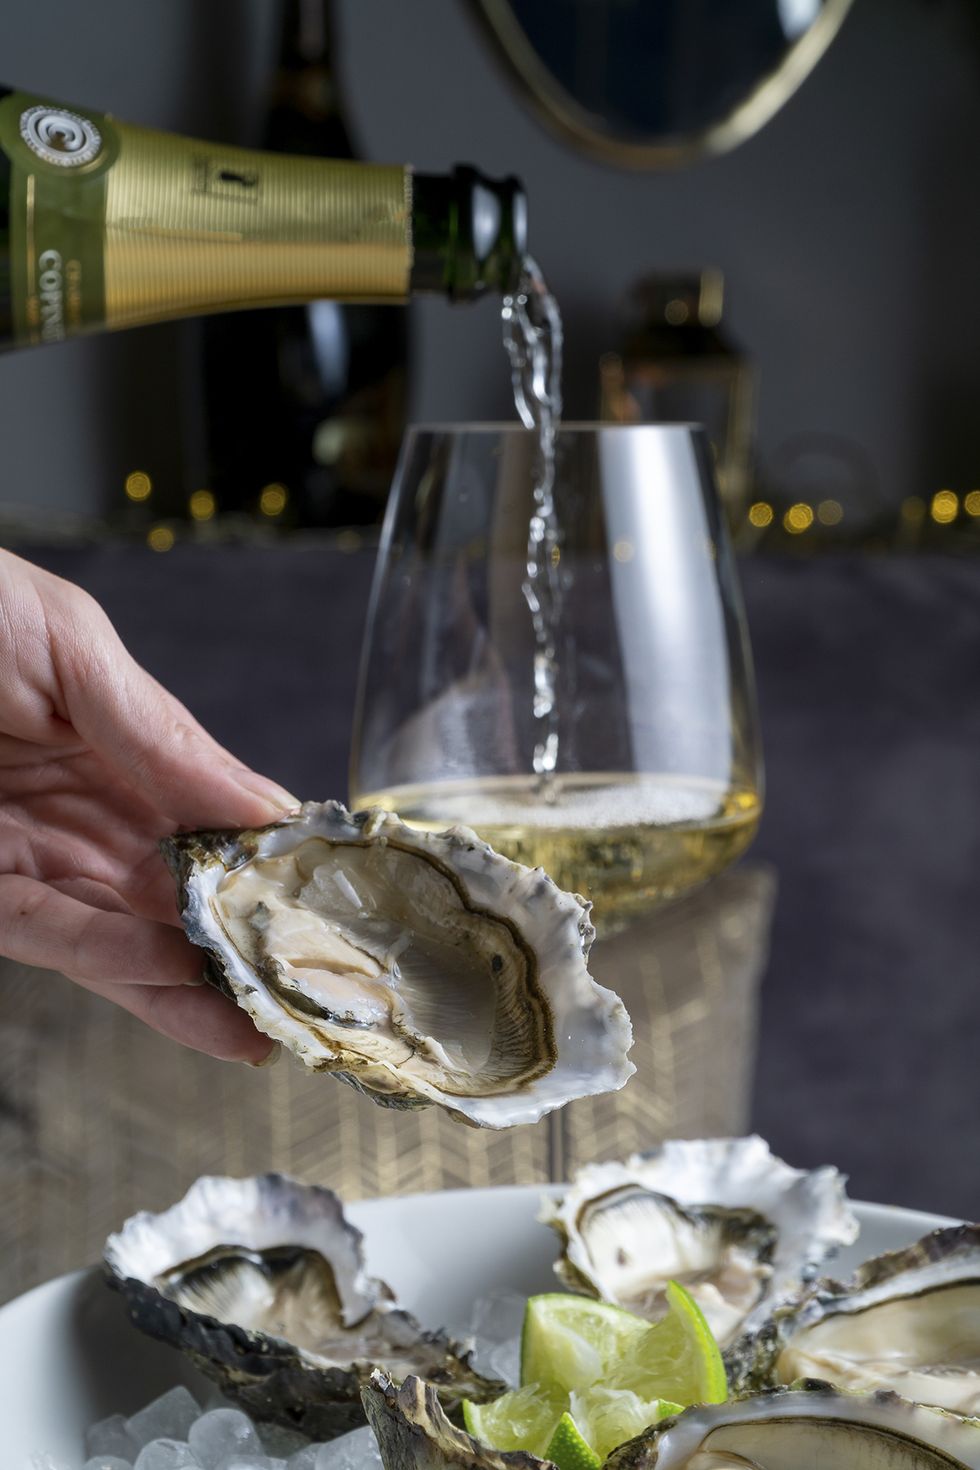 ostras de bretaña con vino, de mûd wine bar